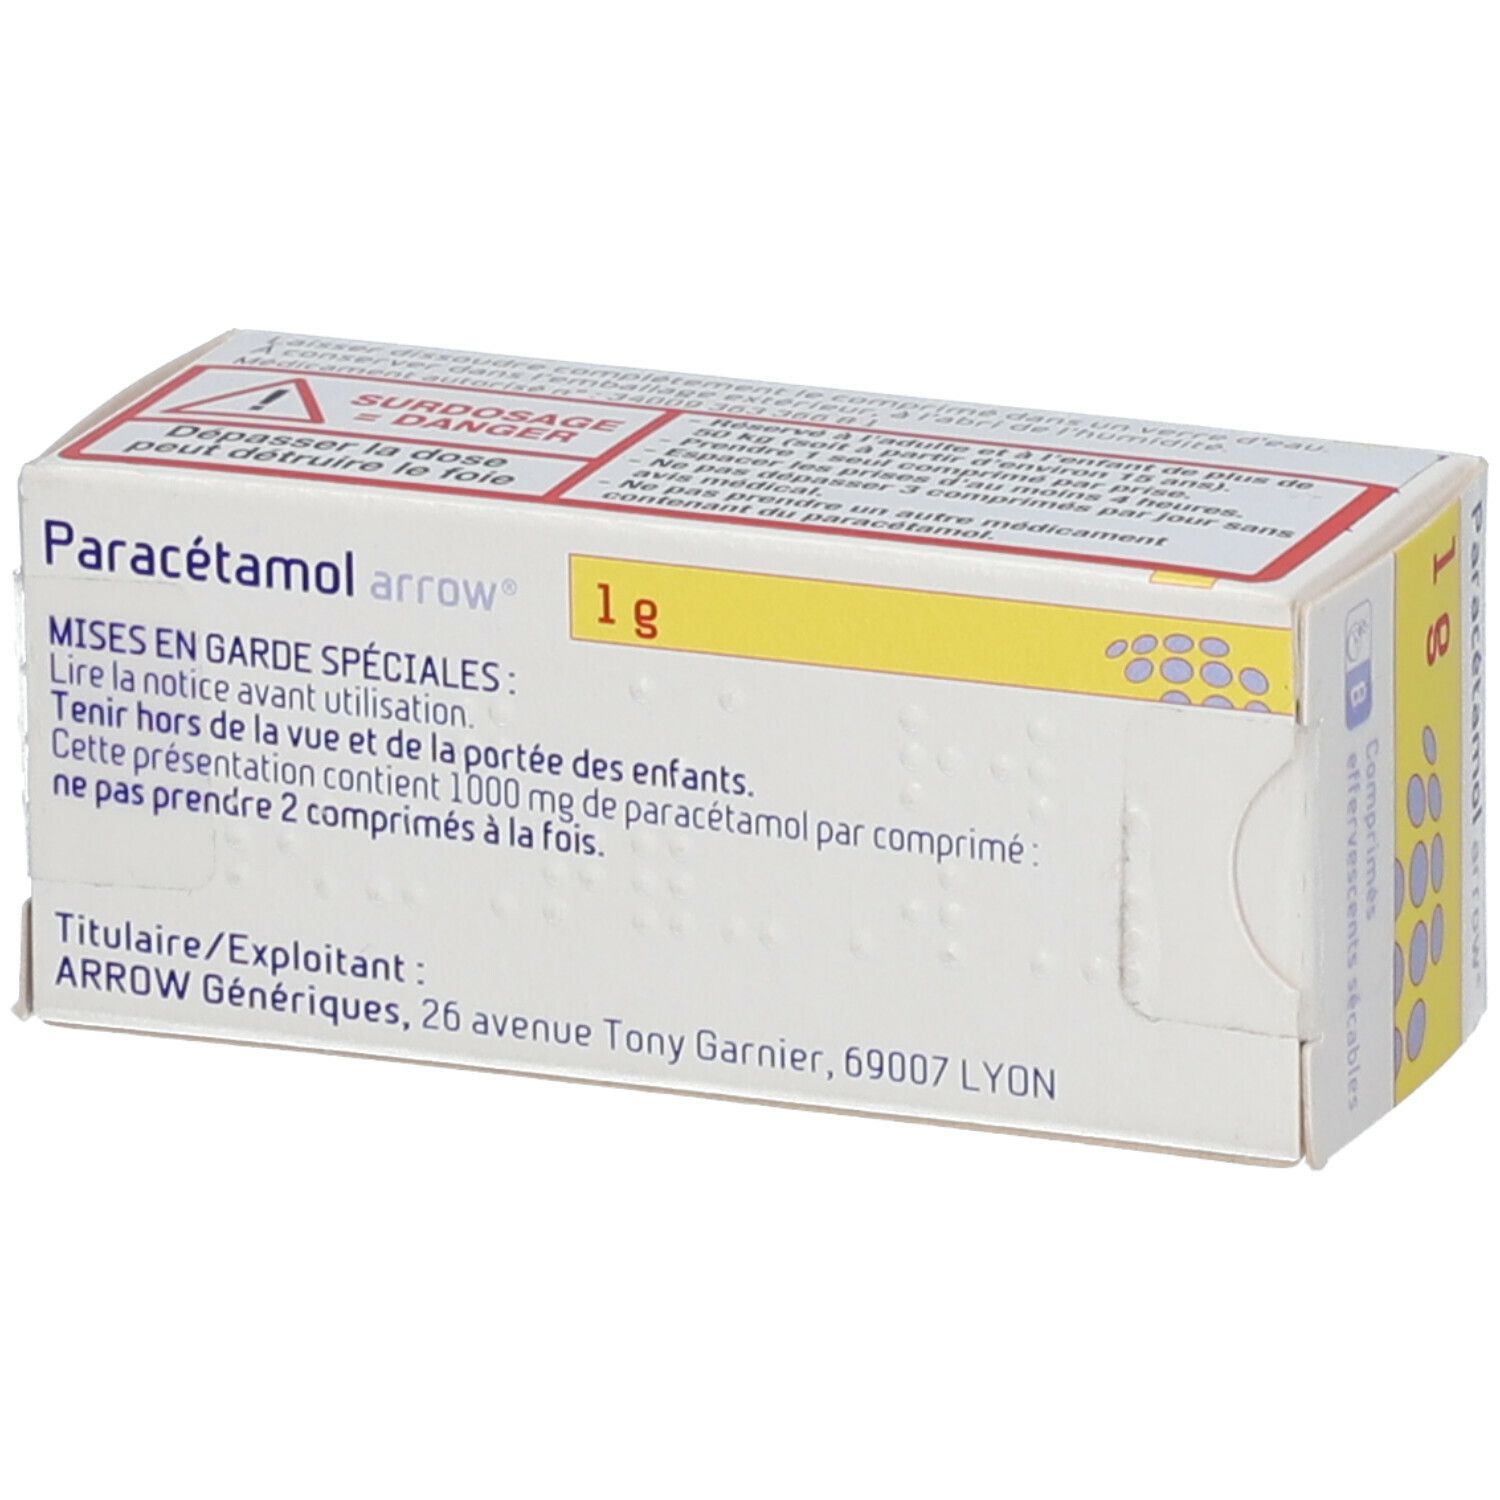 arrow® Paracétamol 1 g